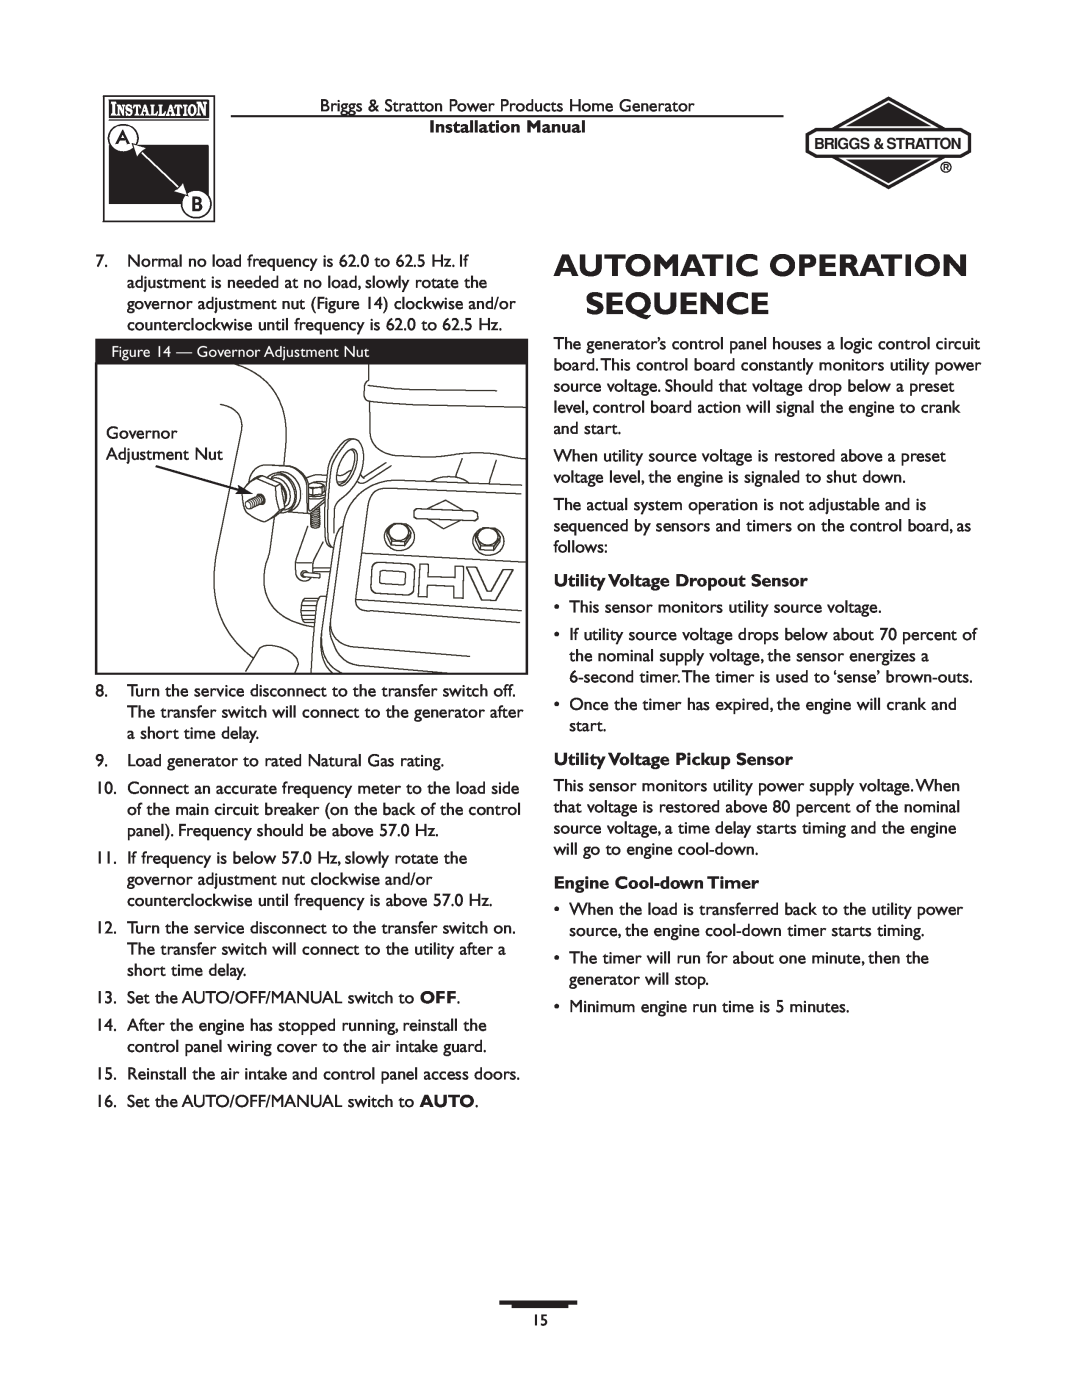 Briggs & Stratton 01815-0 Automatic Operation Sequence, Utility Voltage Dropout Sensor, Utility Voltage Pickup Sensor 